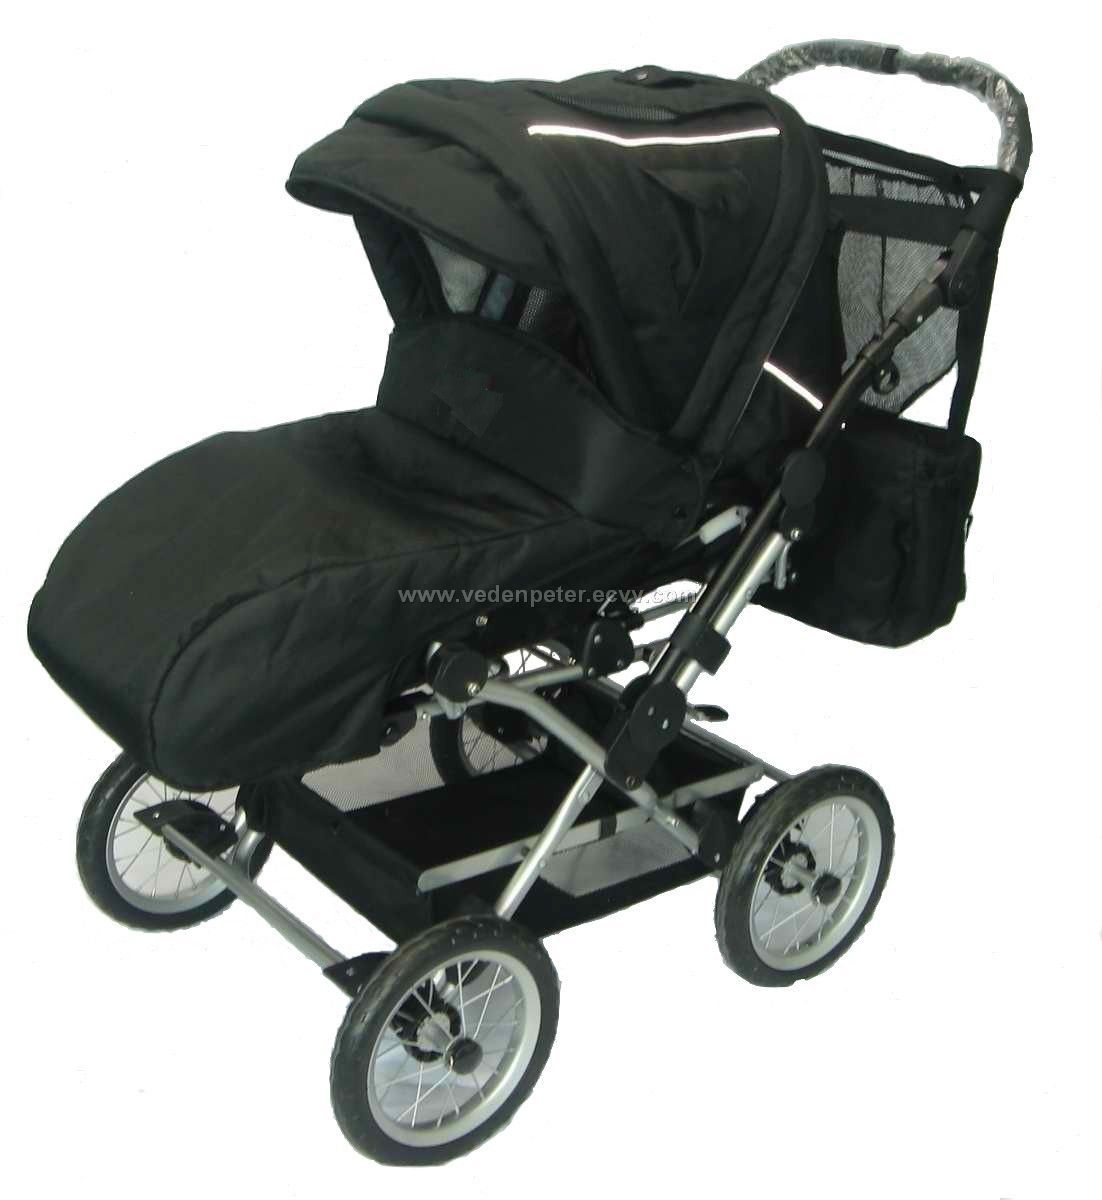 Baby car seat stroller frame